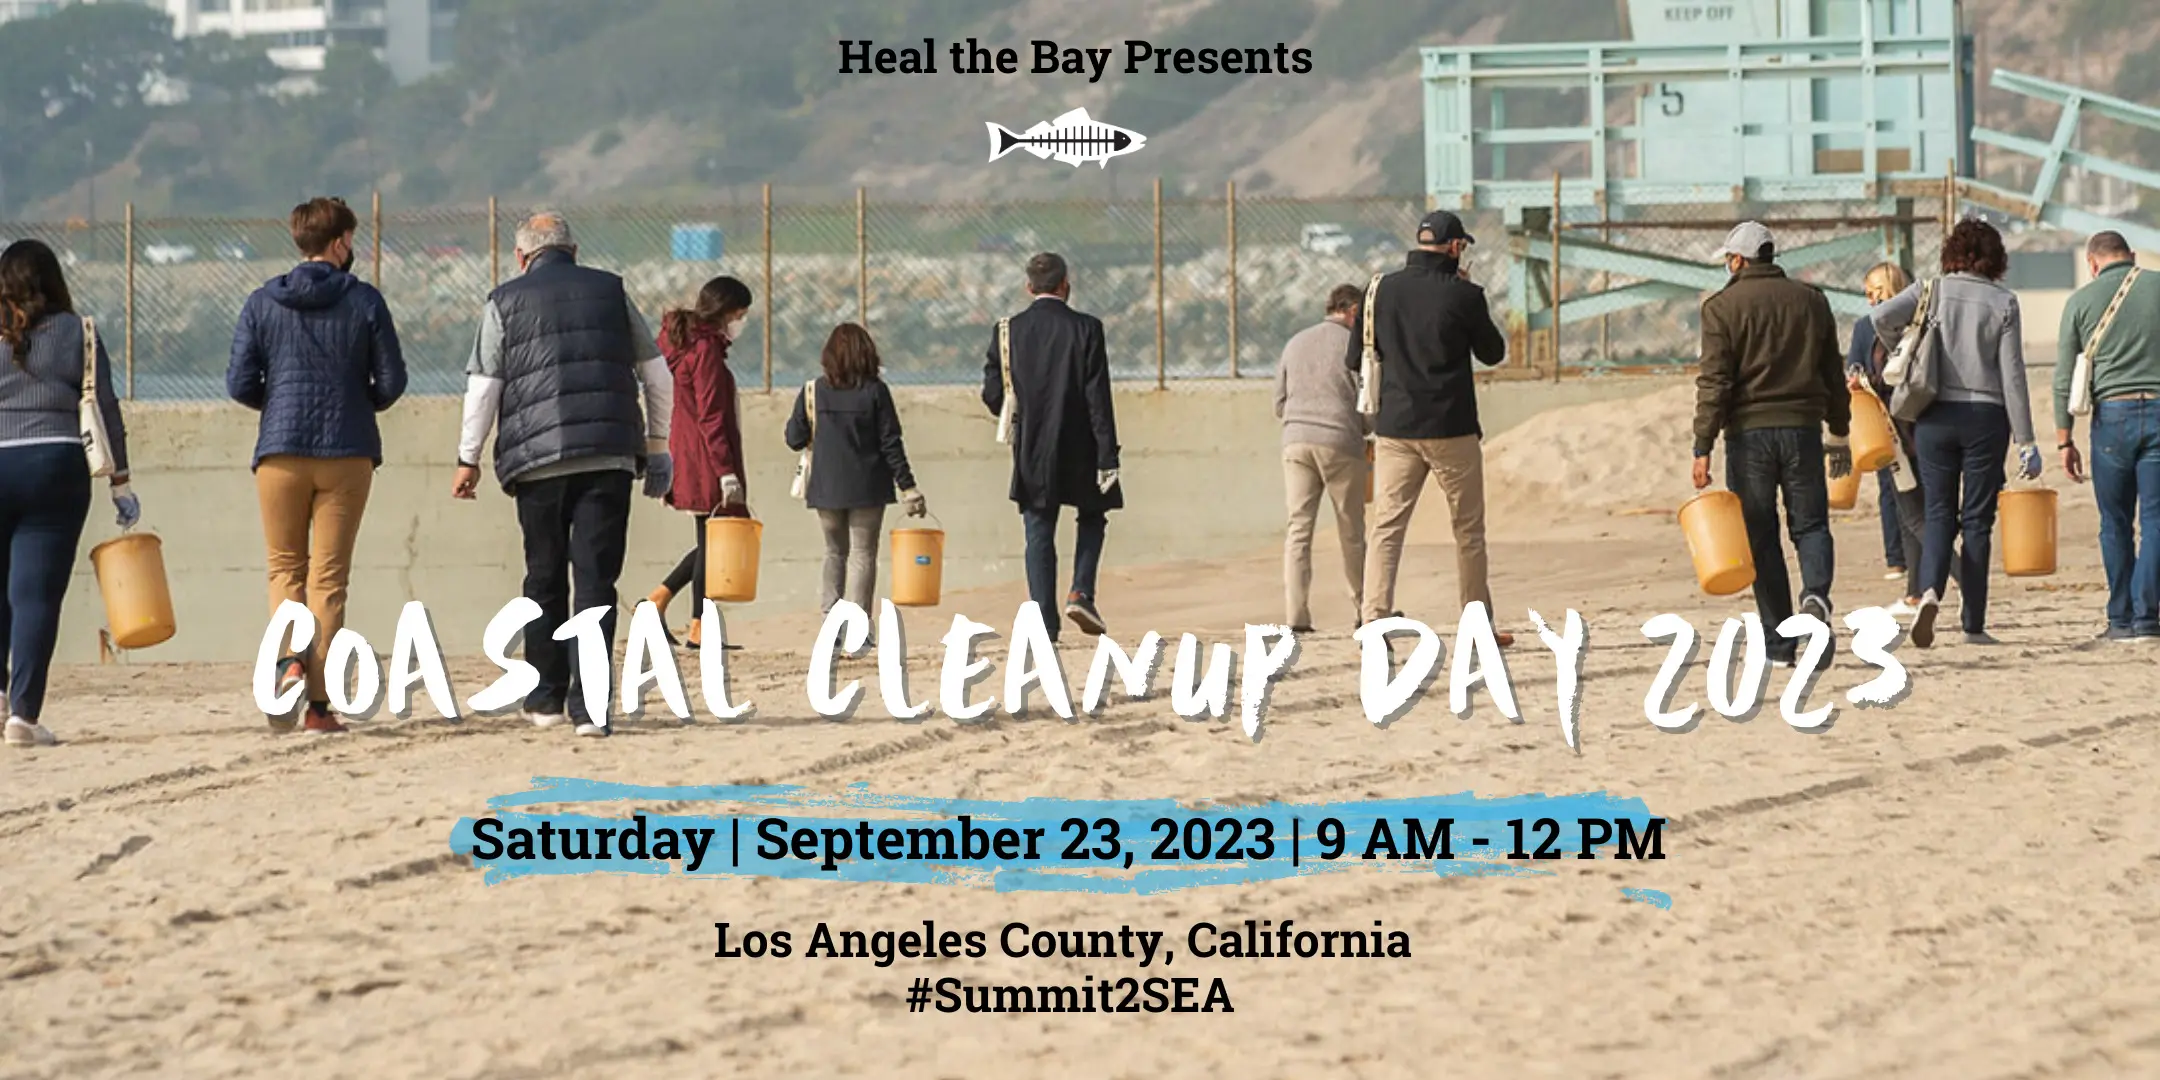 Coastal Cleanup Day at the Bay